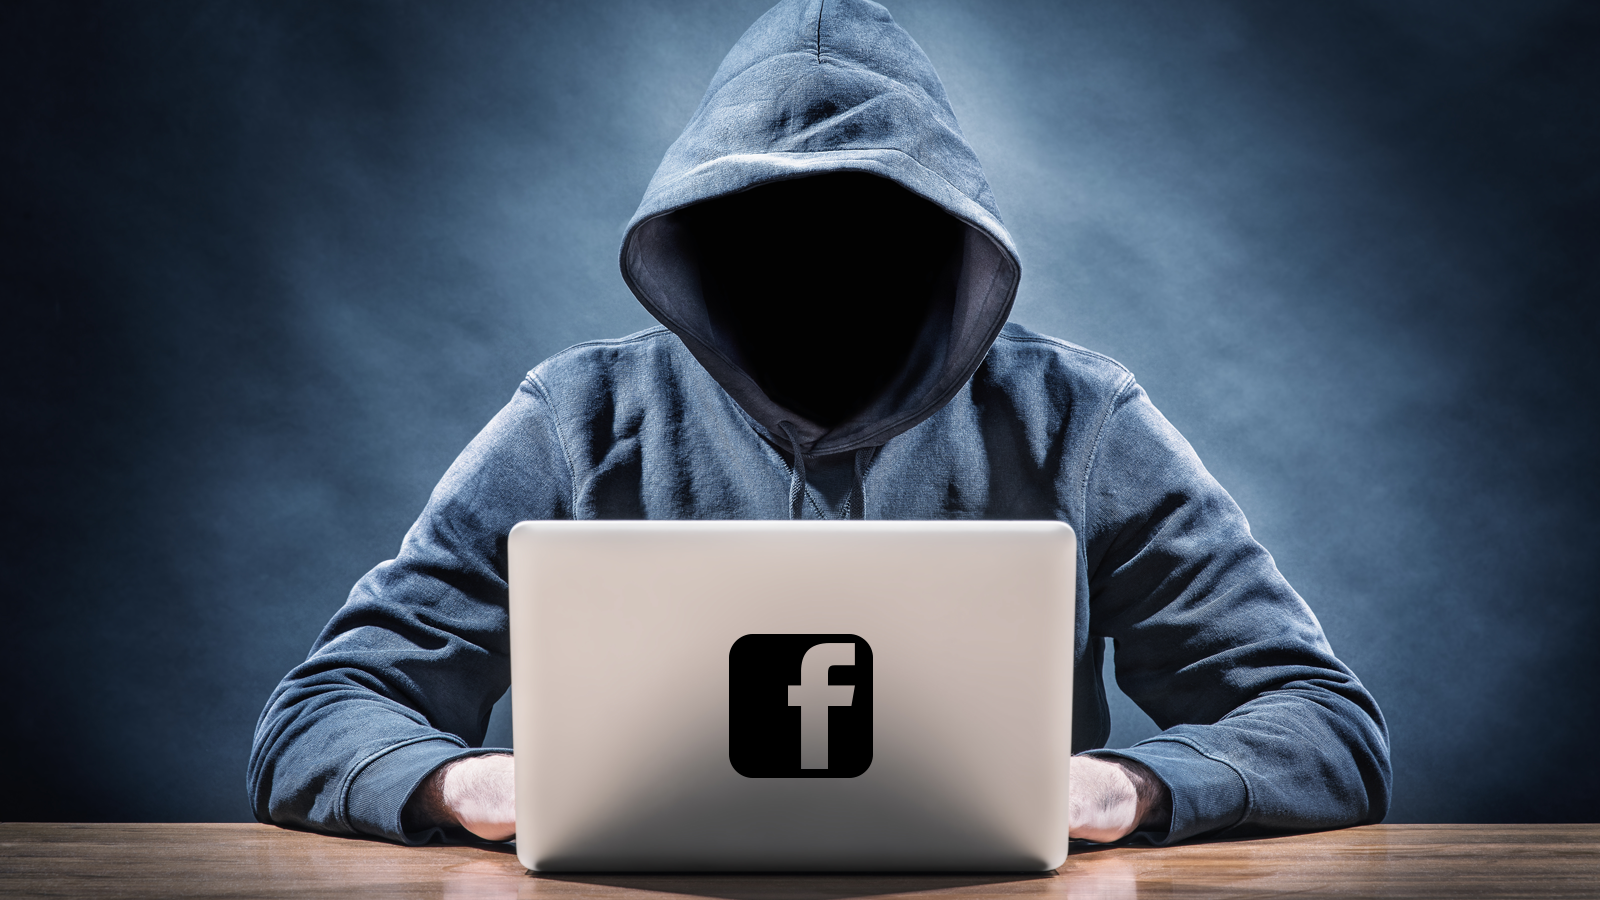 Troyano roba datos de usuarios de Facebook en dispositivos Android. (foto: OCU)